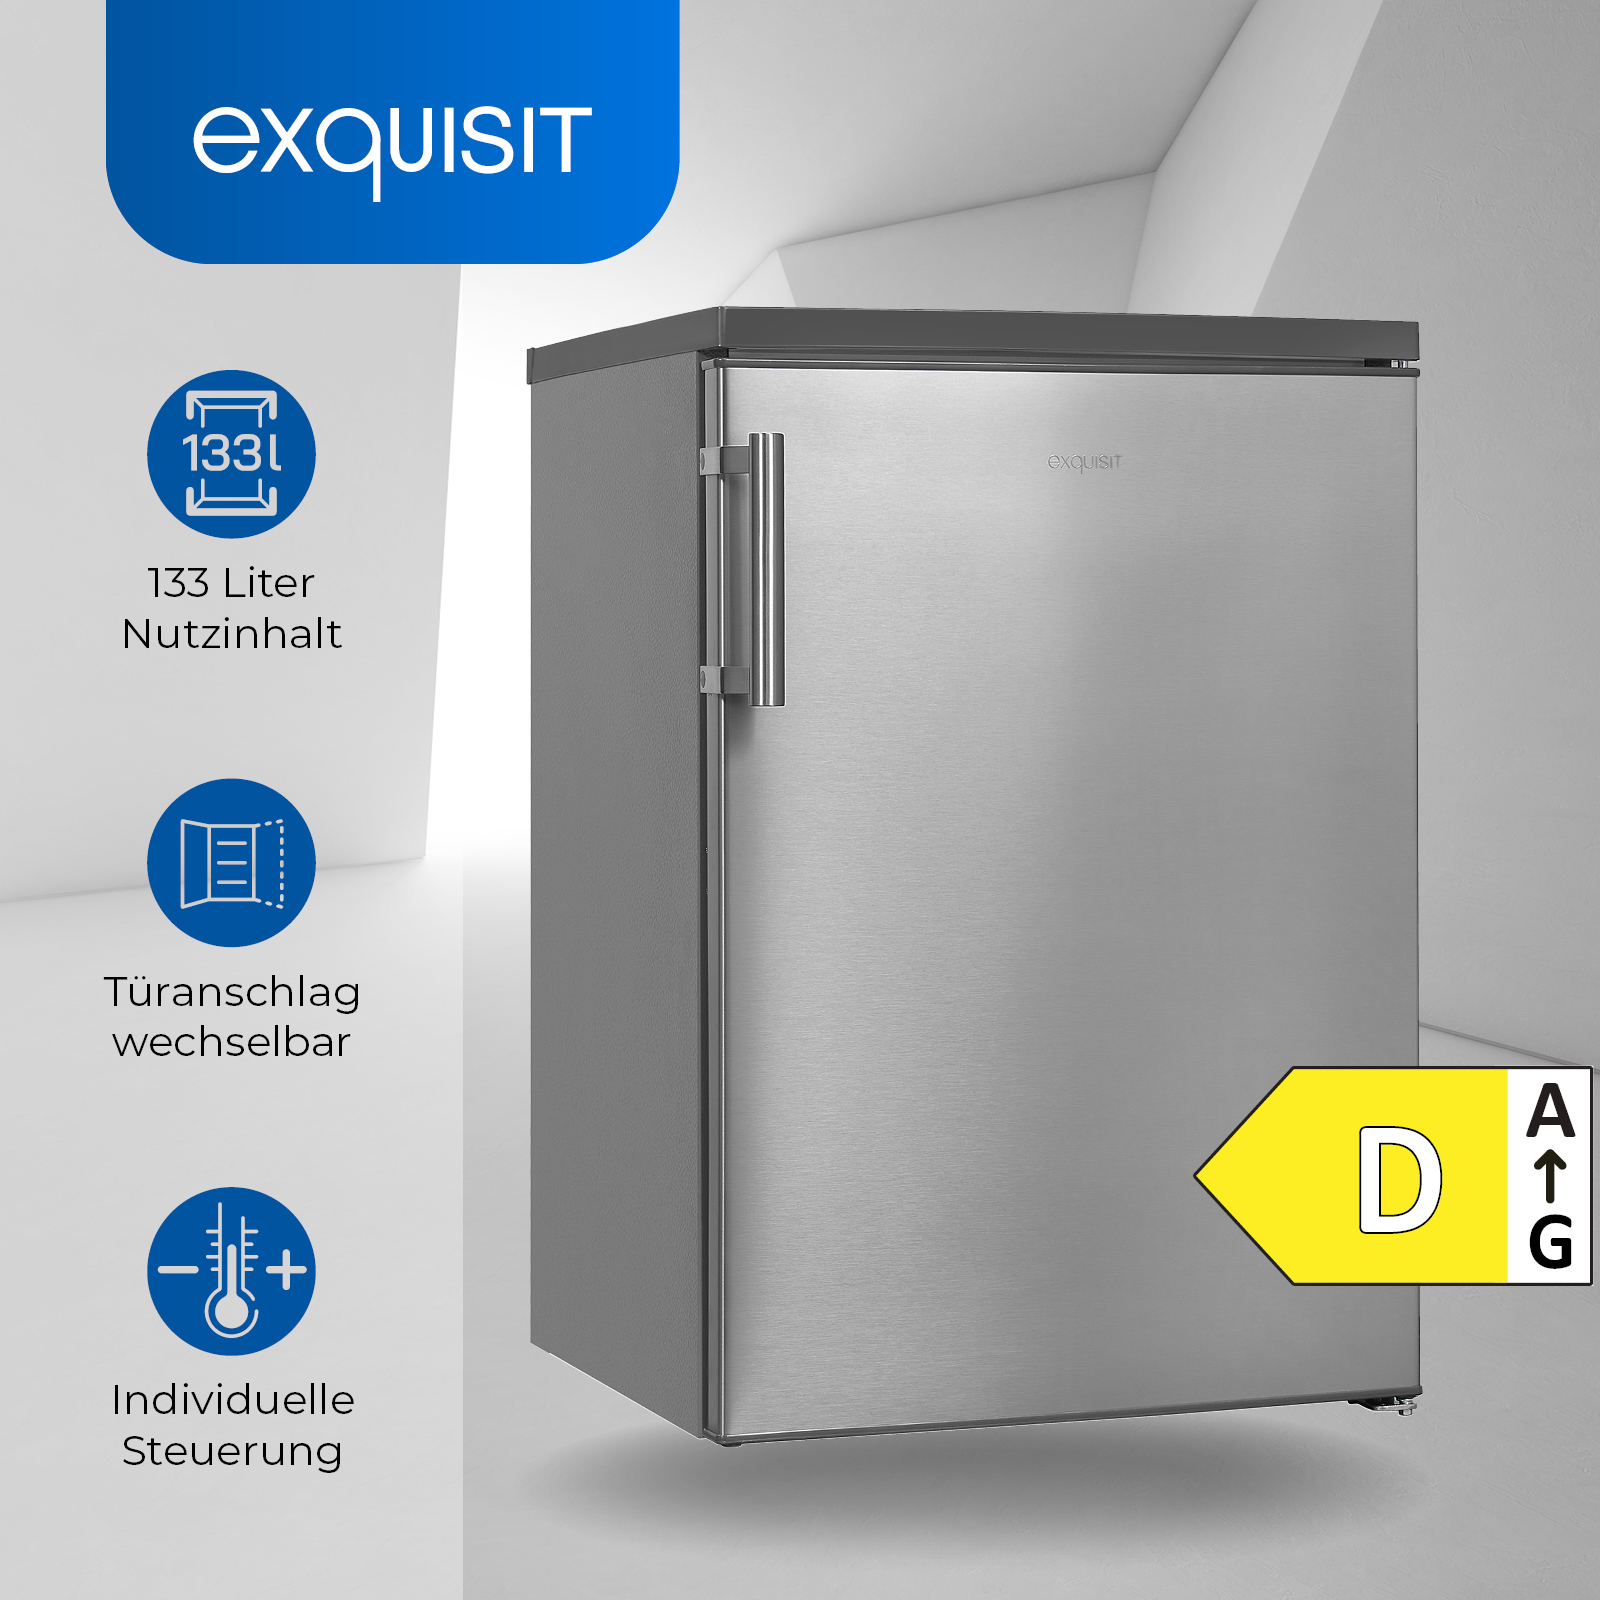 EXQUISIT KS16-V-H-010D inoxlook (D, hoch, Silber) 850 mm Kühlschrank